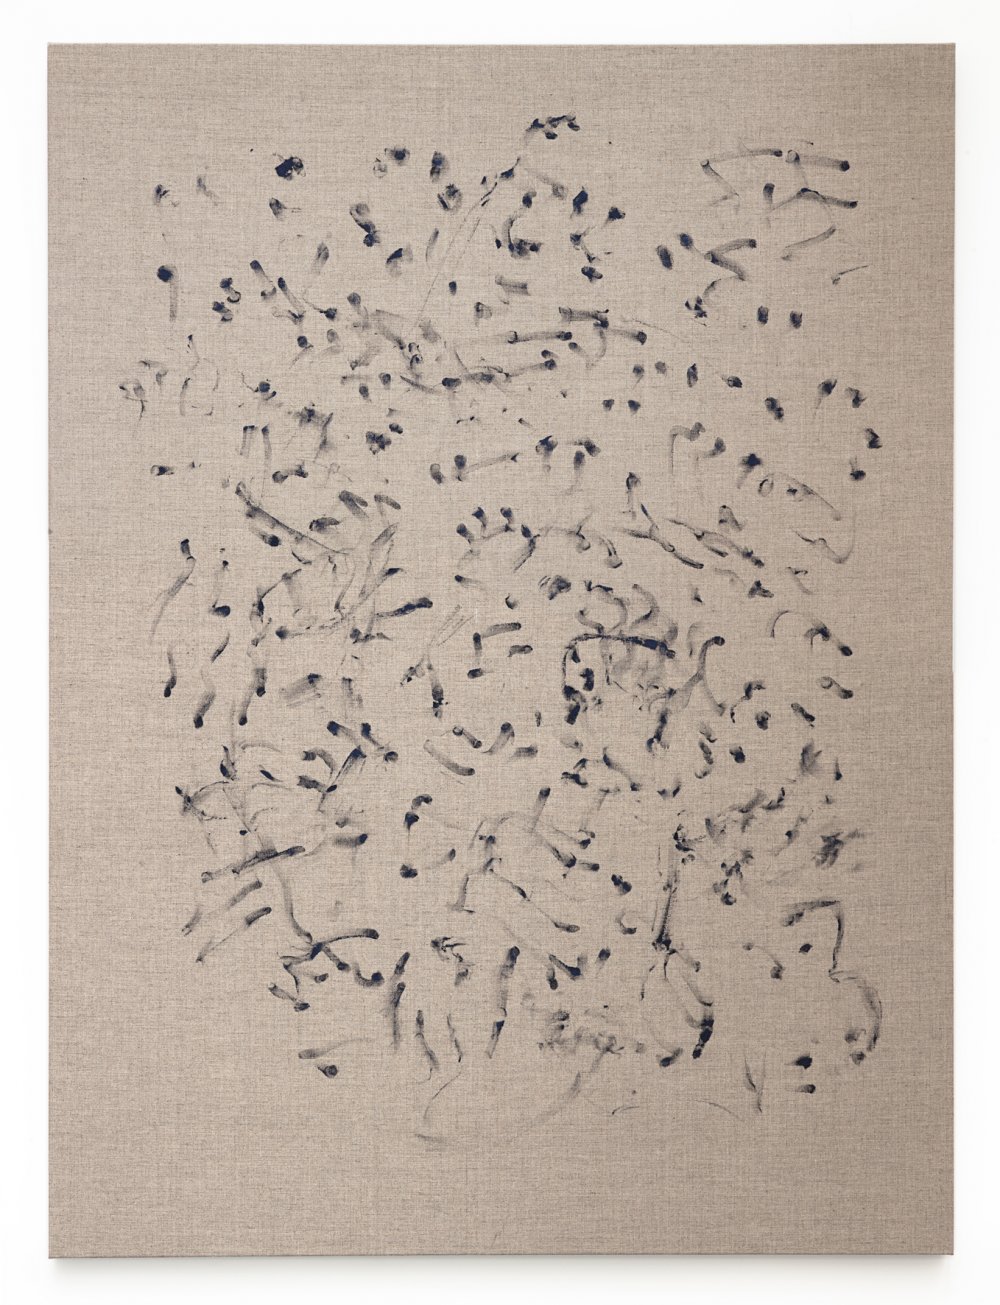 Donna Huanca, ‘Finger paining (YSL, faux CILS)’ (2015). Install view. Courtesy Valentin, Paris.